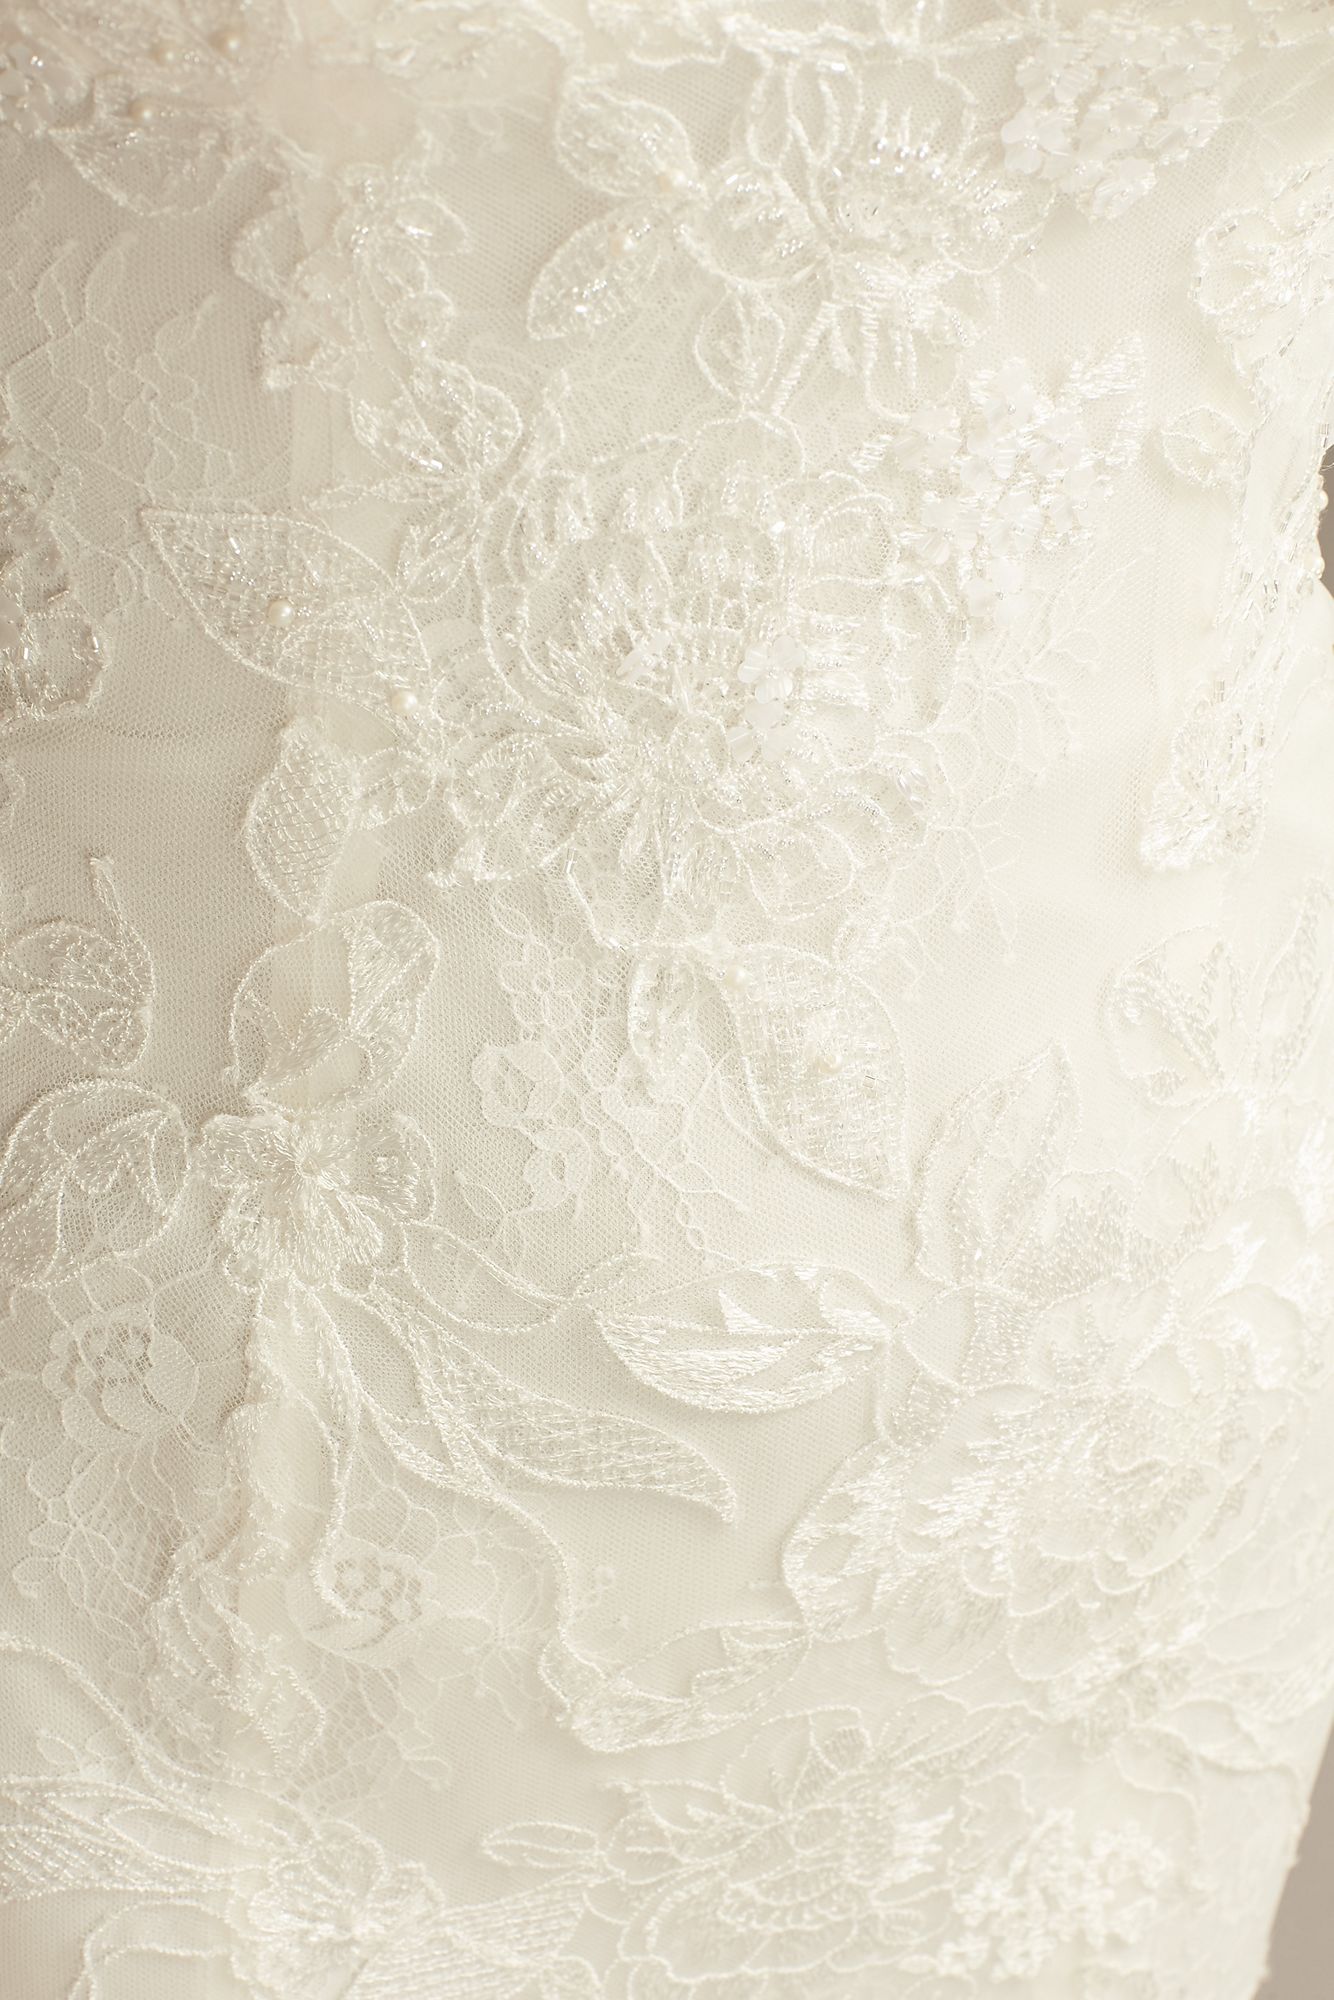 Floral Lace Applique Spaghetti-Strap Wedding Dress WG3981